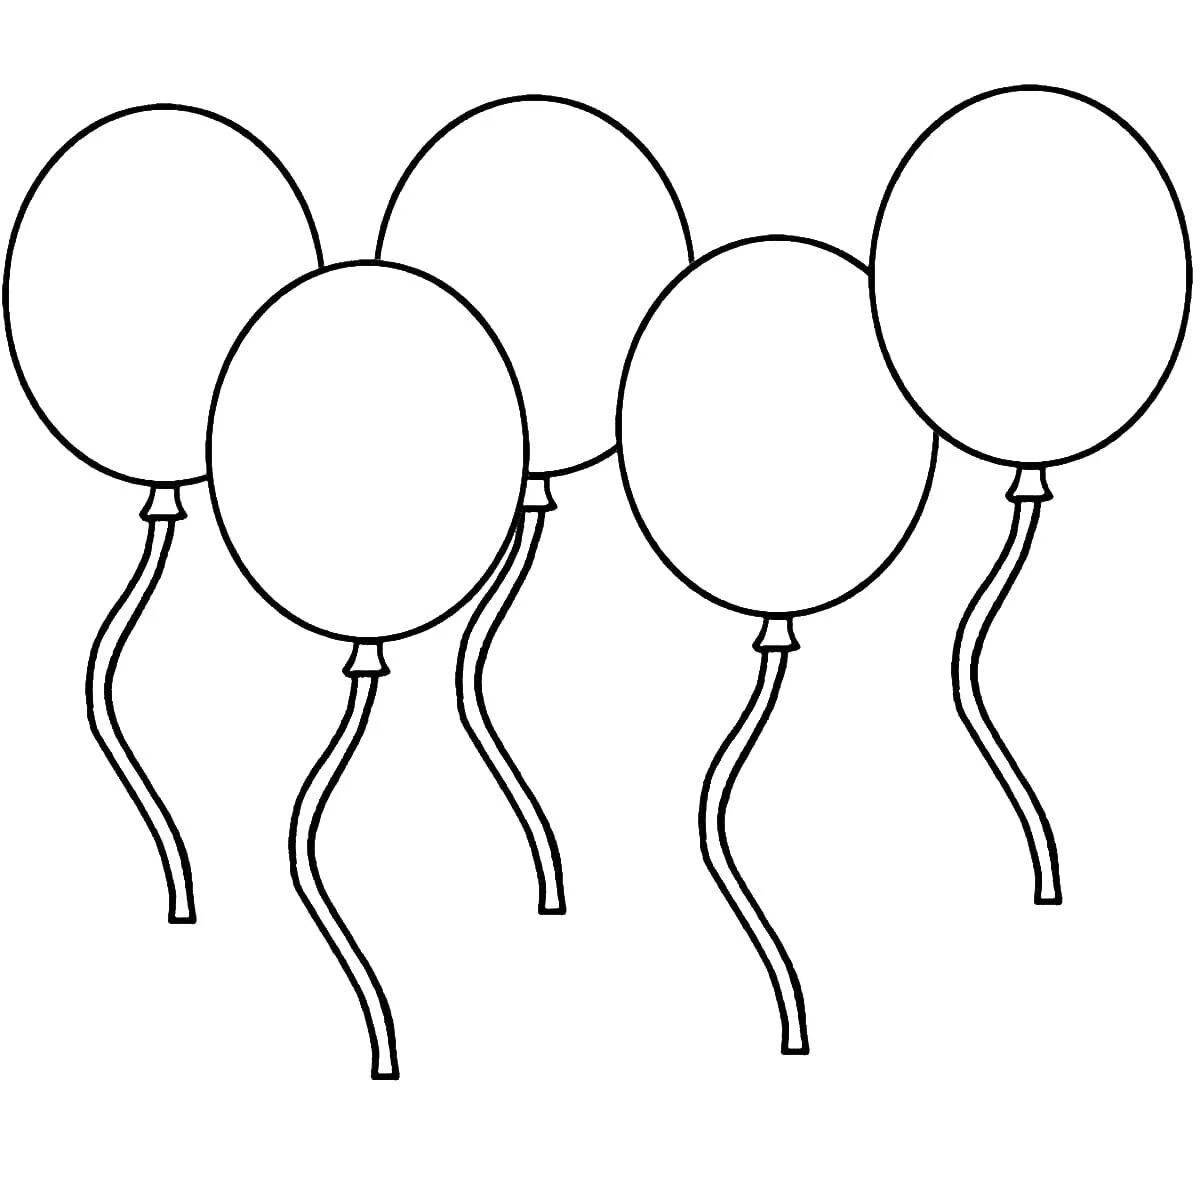 Luminous balloons for children 2-3 years old